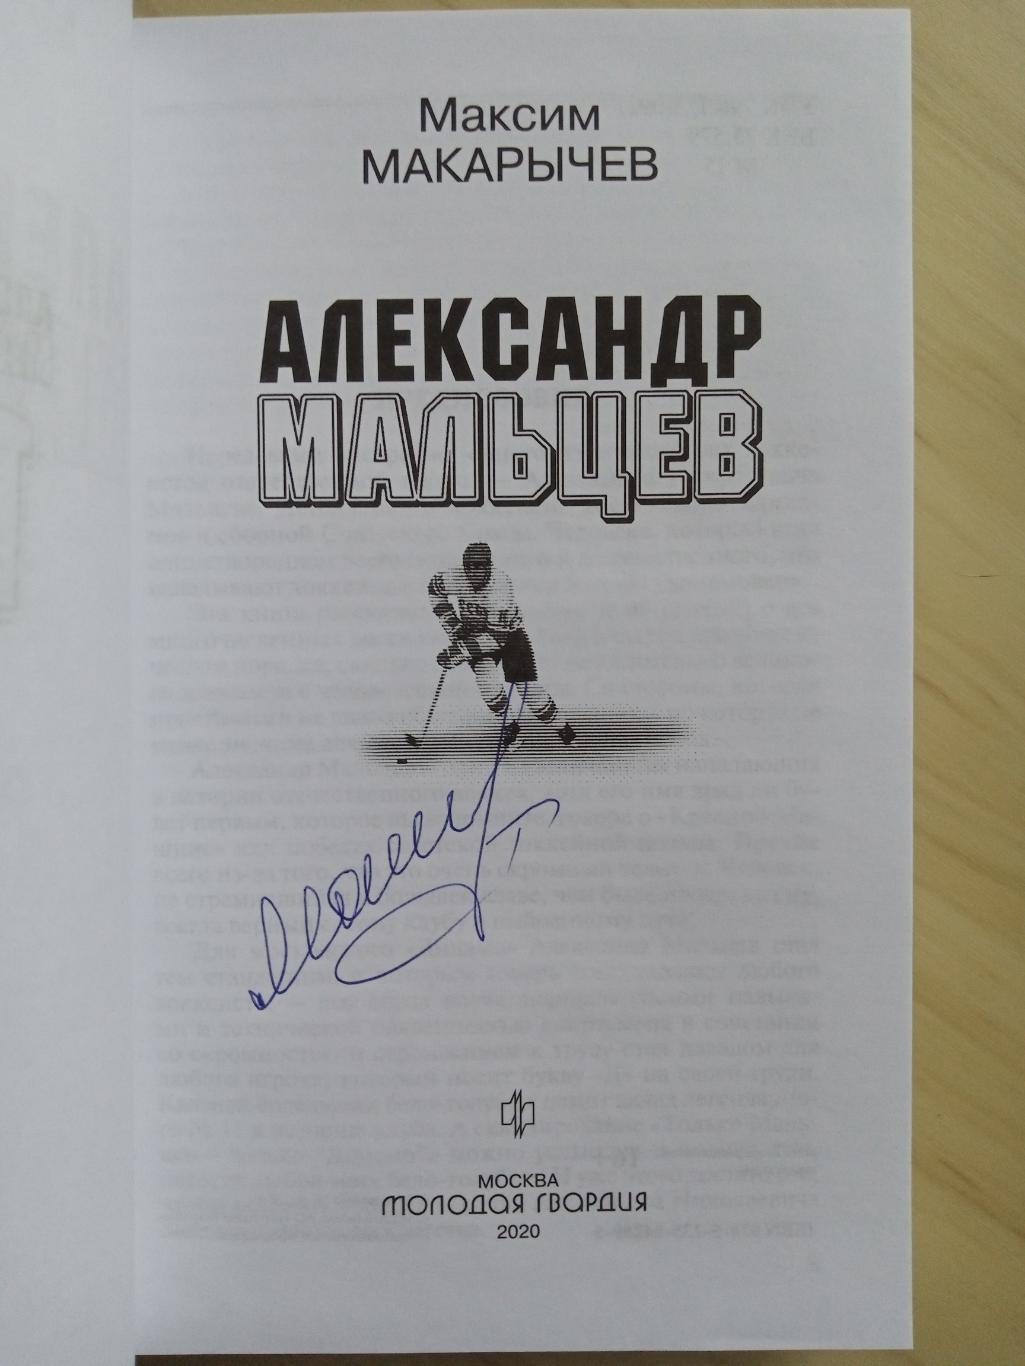 Книга Максим Макарычев Александр Мальцев с автографом Александра Мальцева 2